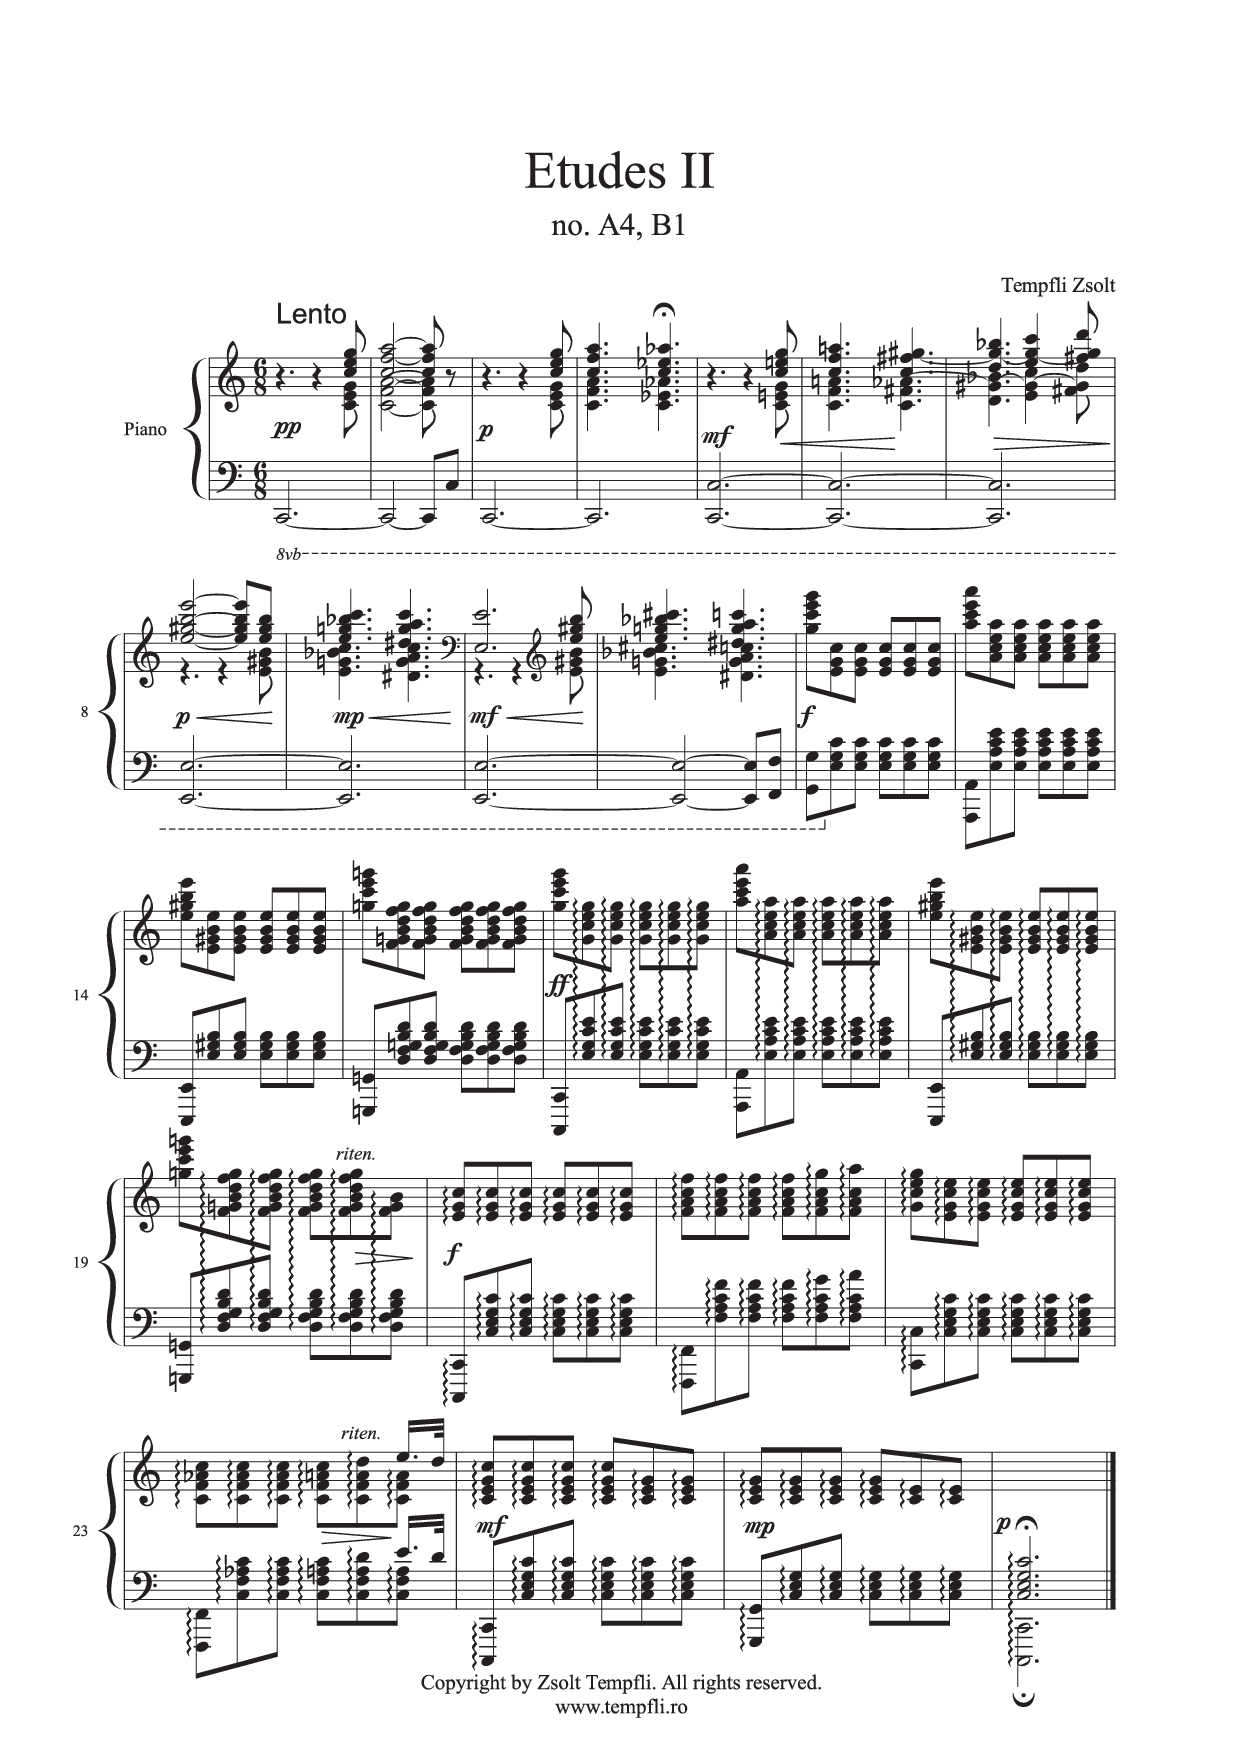 Zsolt Tempfli: Studii II nr. A4 sau B1 pentru pian